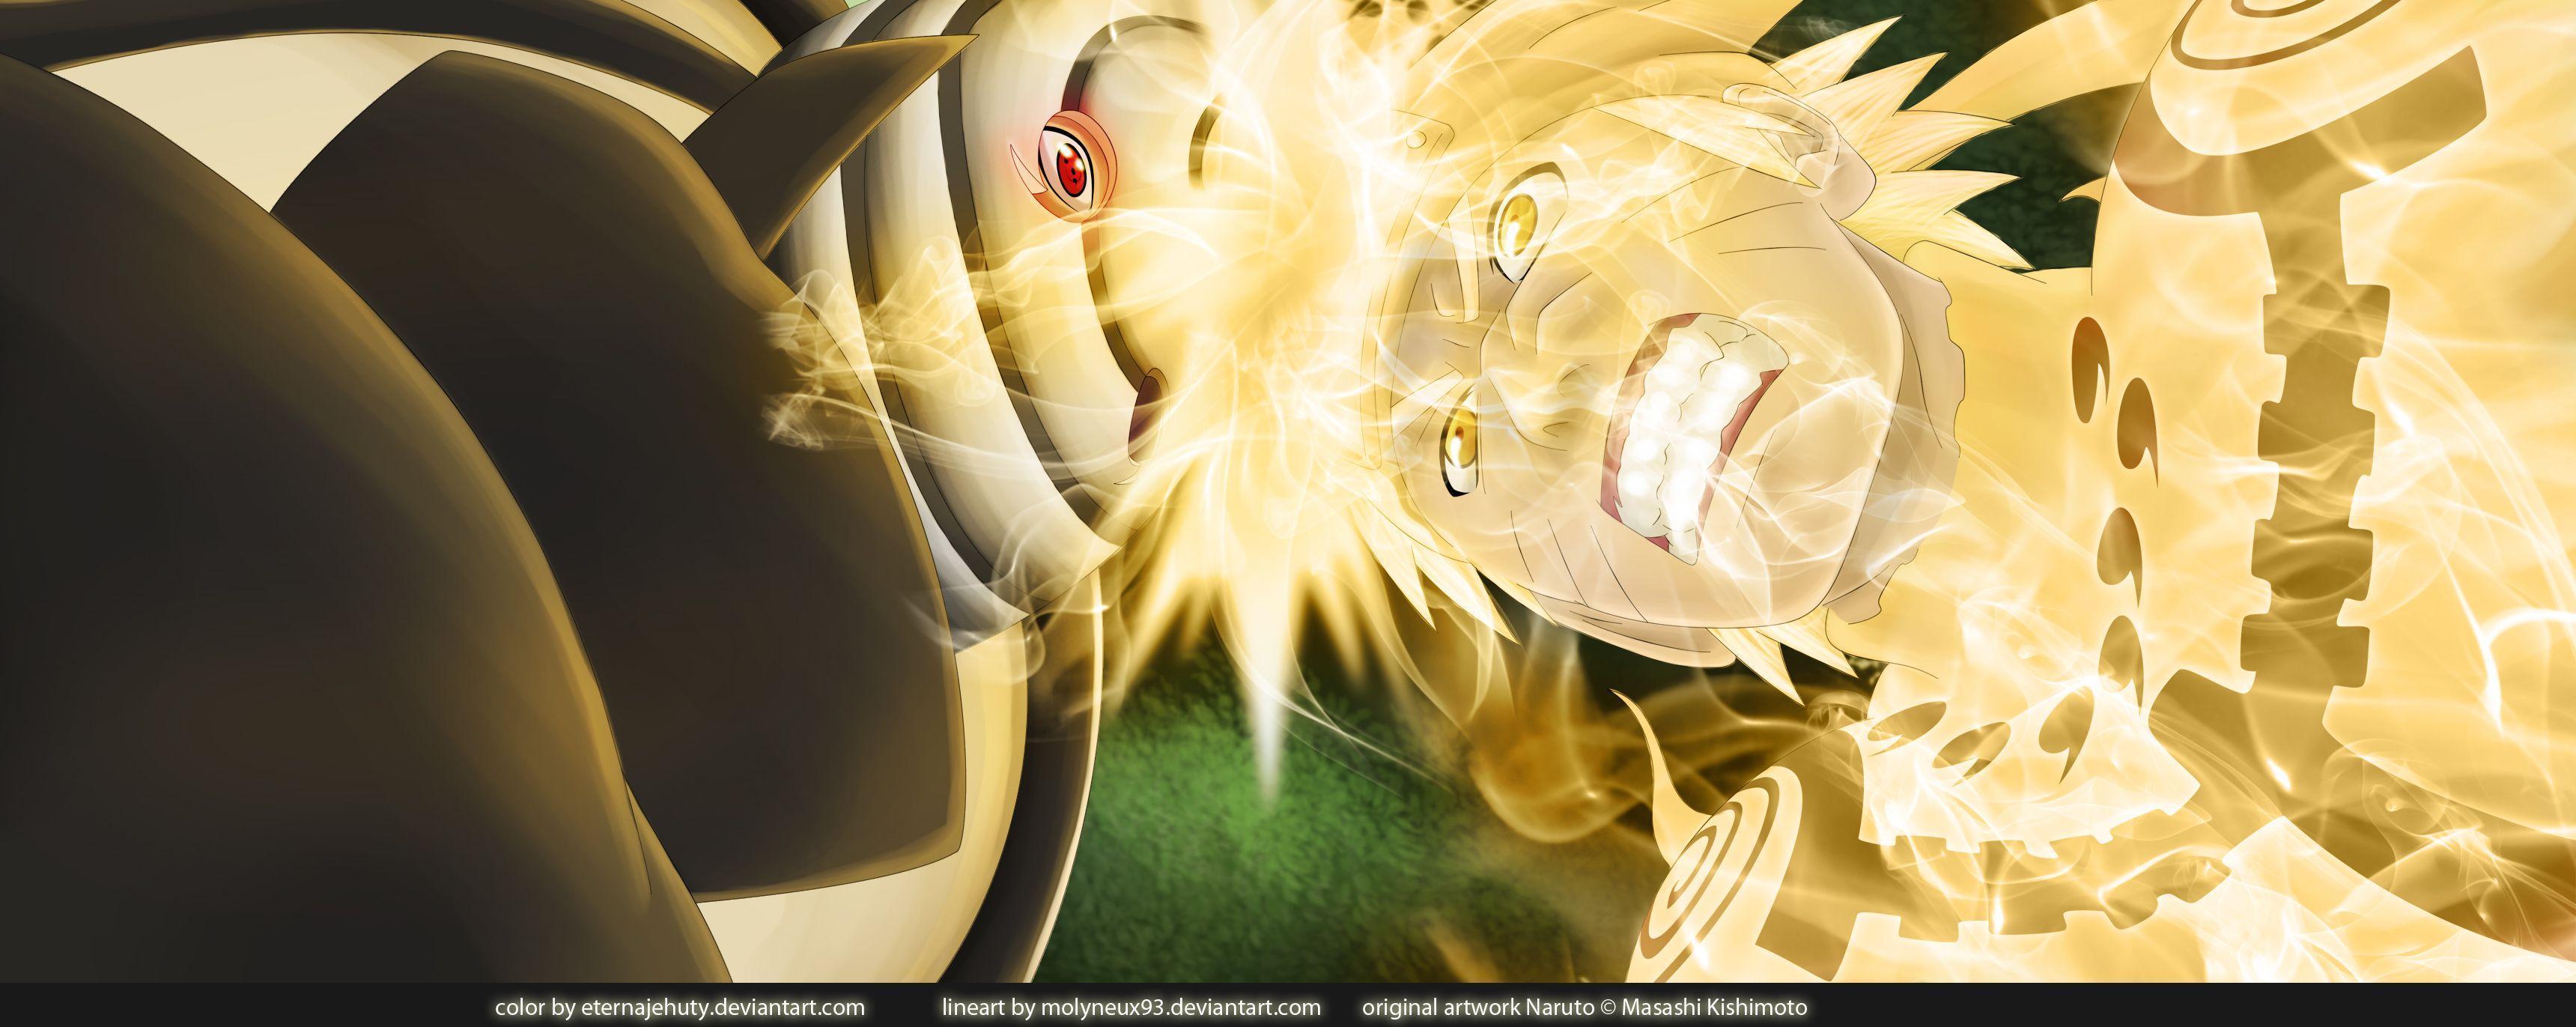 Naruto VS Madara HD Wallpaper 1080p. Anime Wallpaper